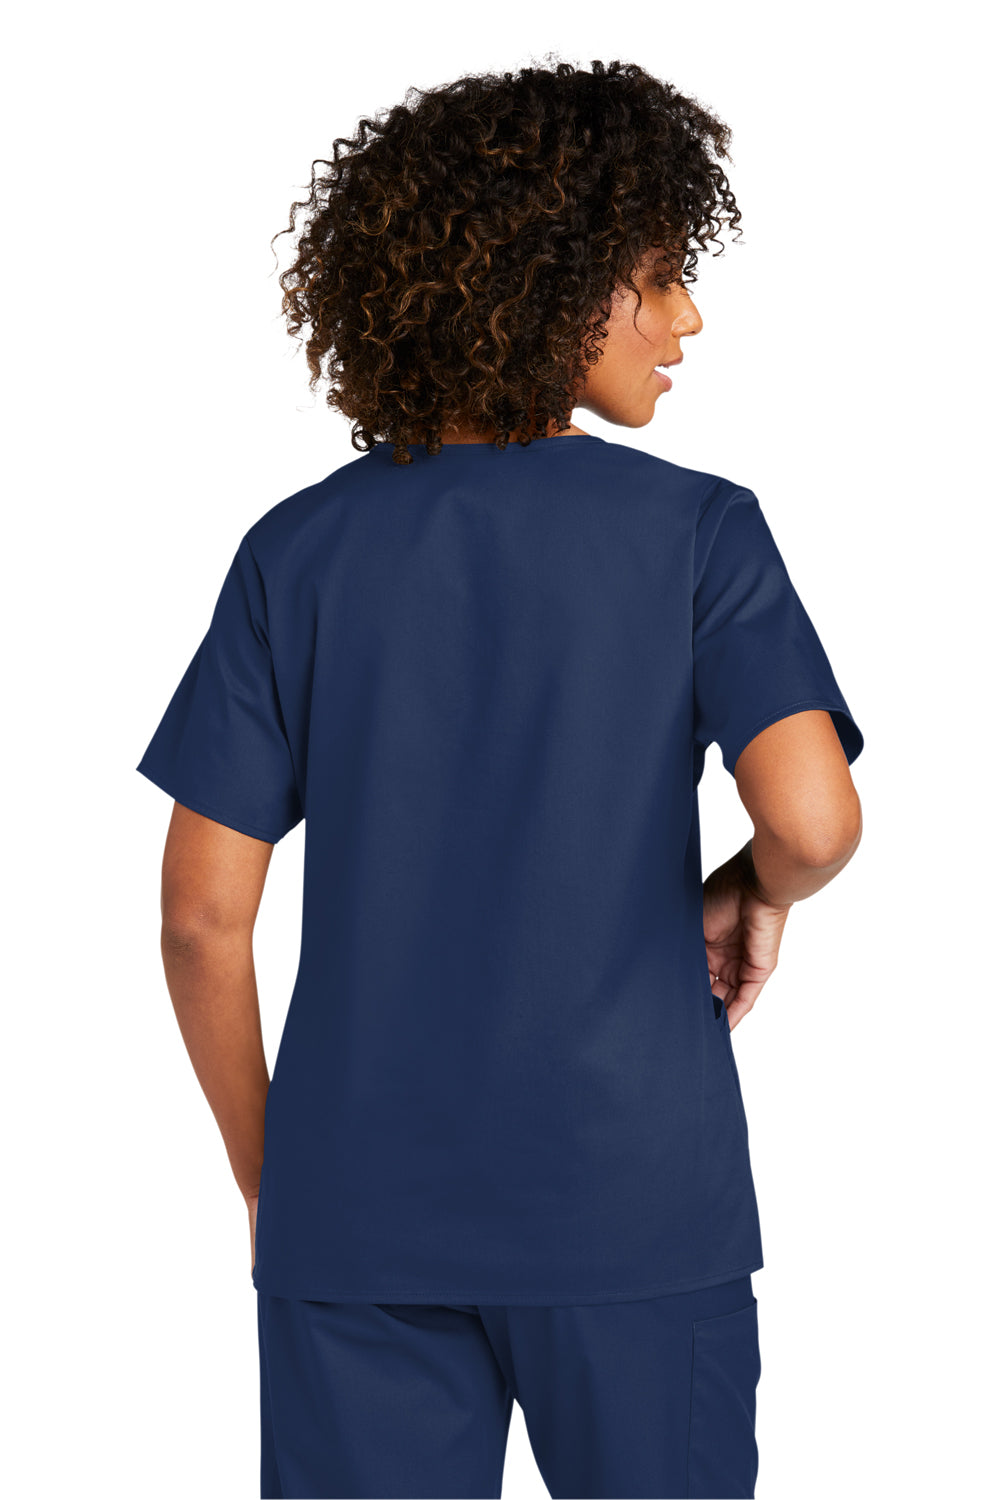 Wonderwink WW4760 WorkFlex Short Sleeve V-Neck Mock Wrap Shirt Navy Blue Back